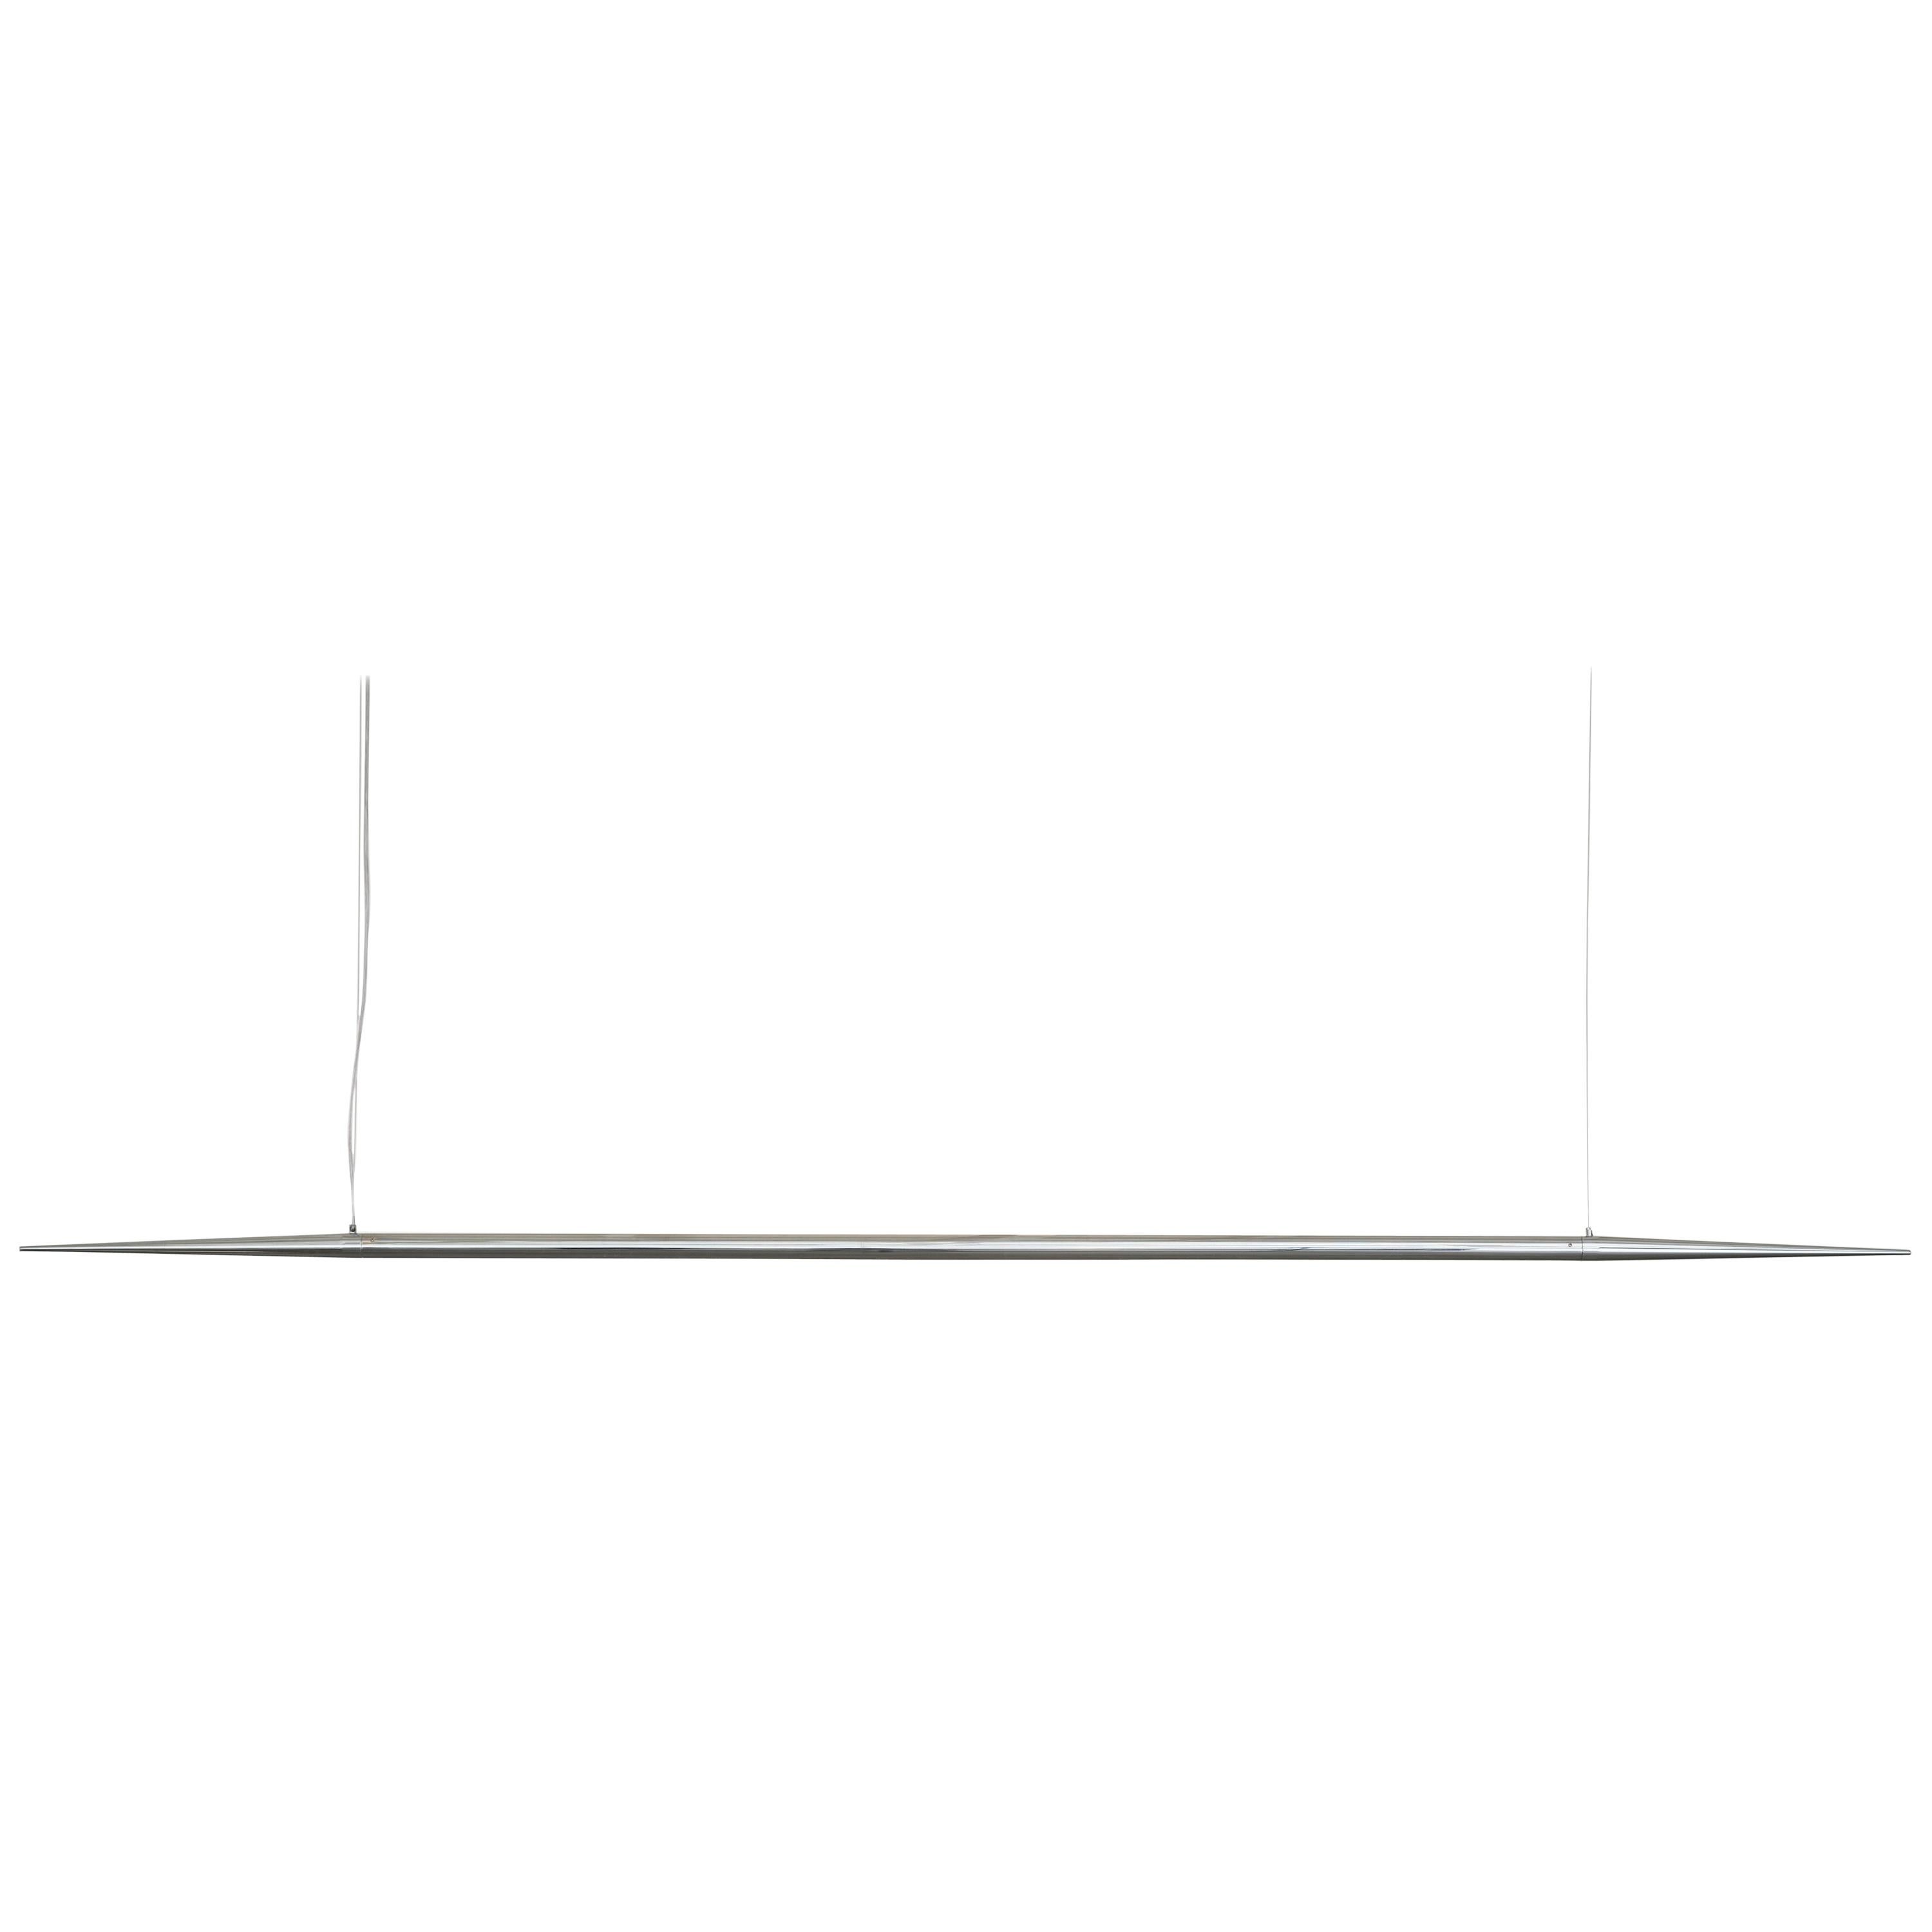 Ferrão Pendant Lamp, 150cm, by Rain, Contemporary Lamp, Aluminium, Chrome For Sale